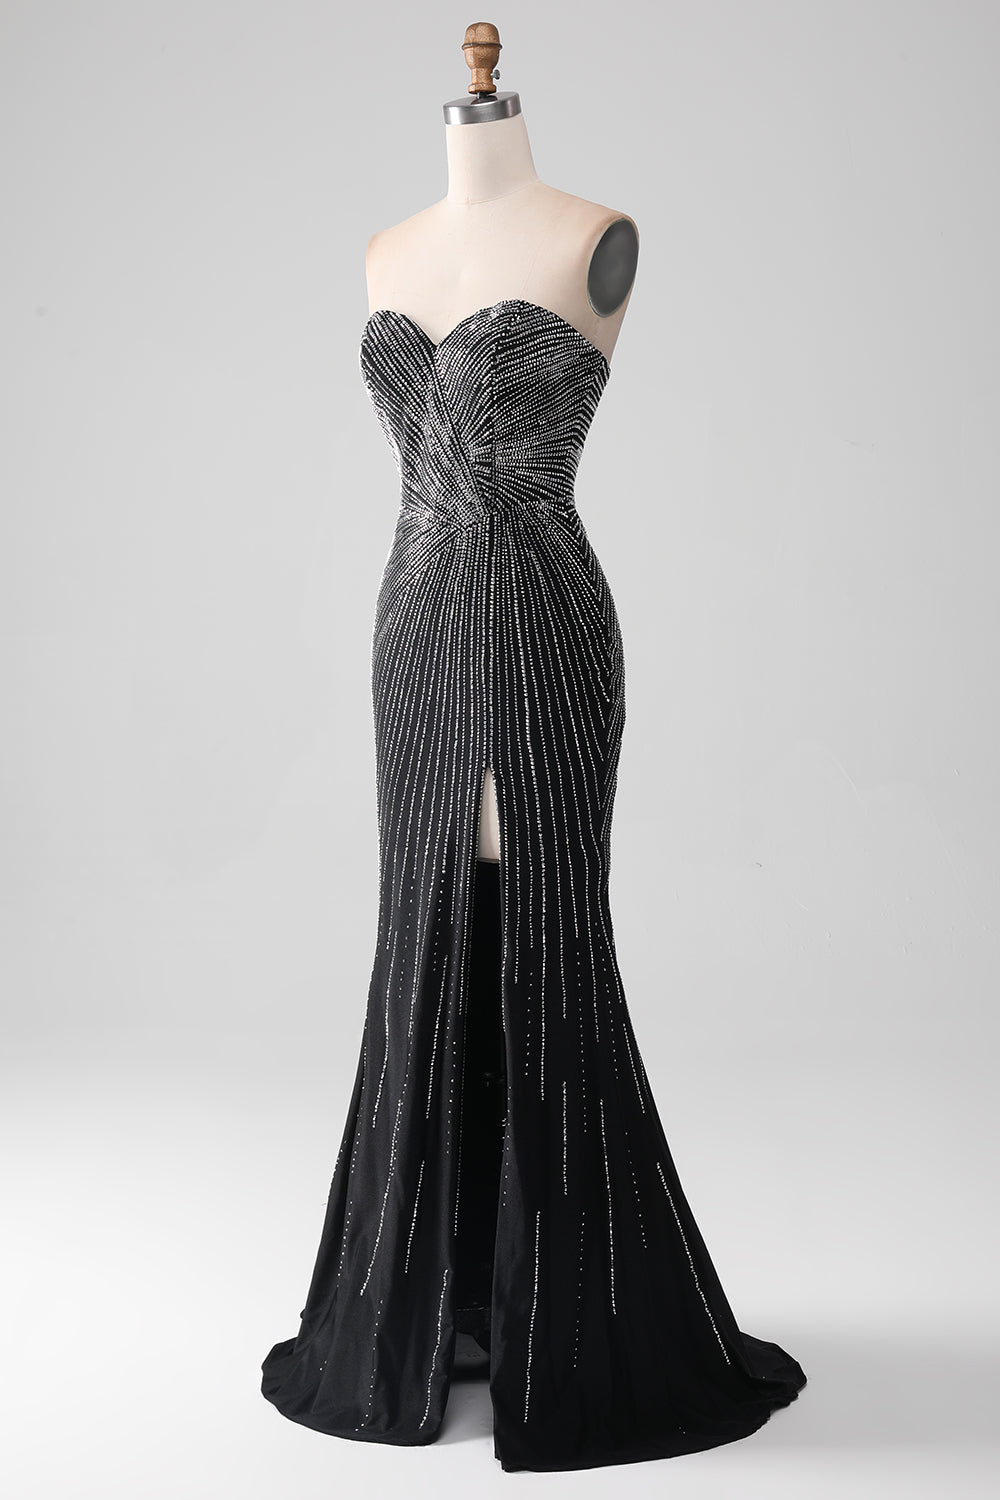 Black Glitter Strapless Mermaid Prom Dress with Slit